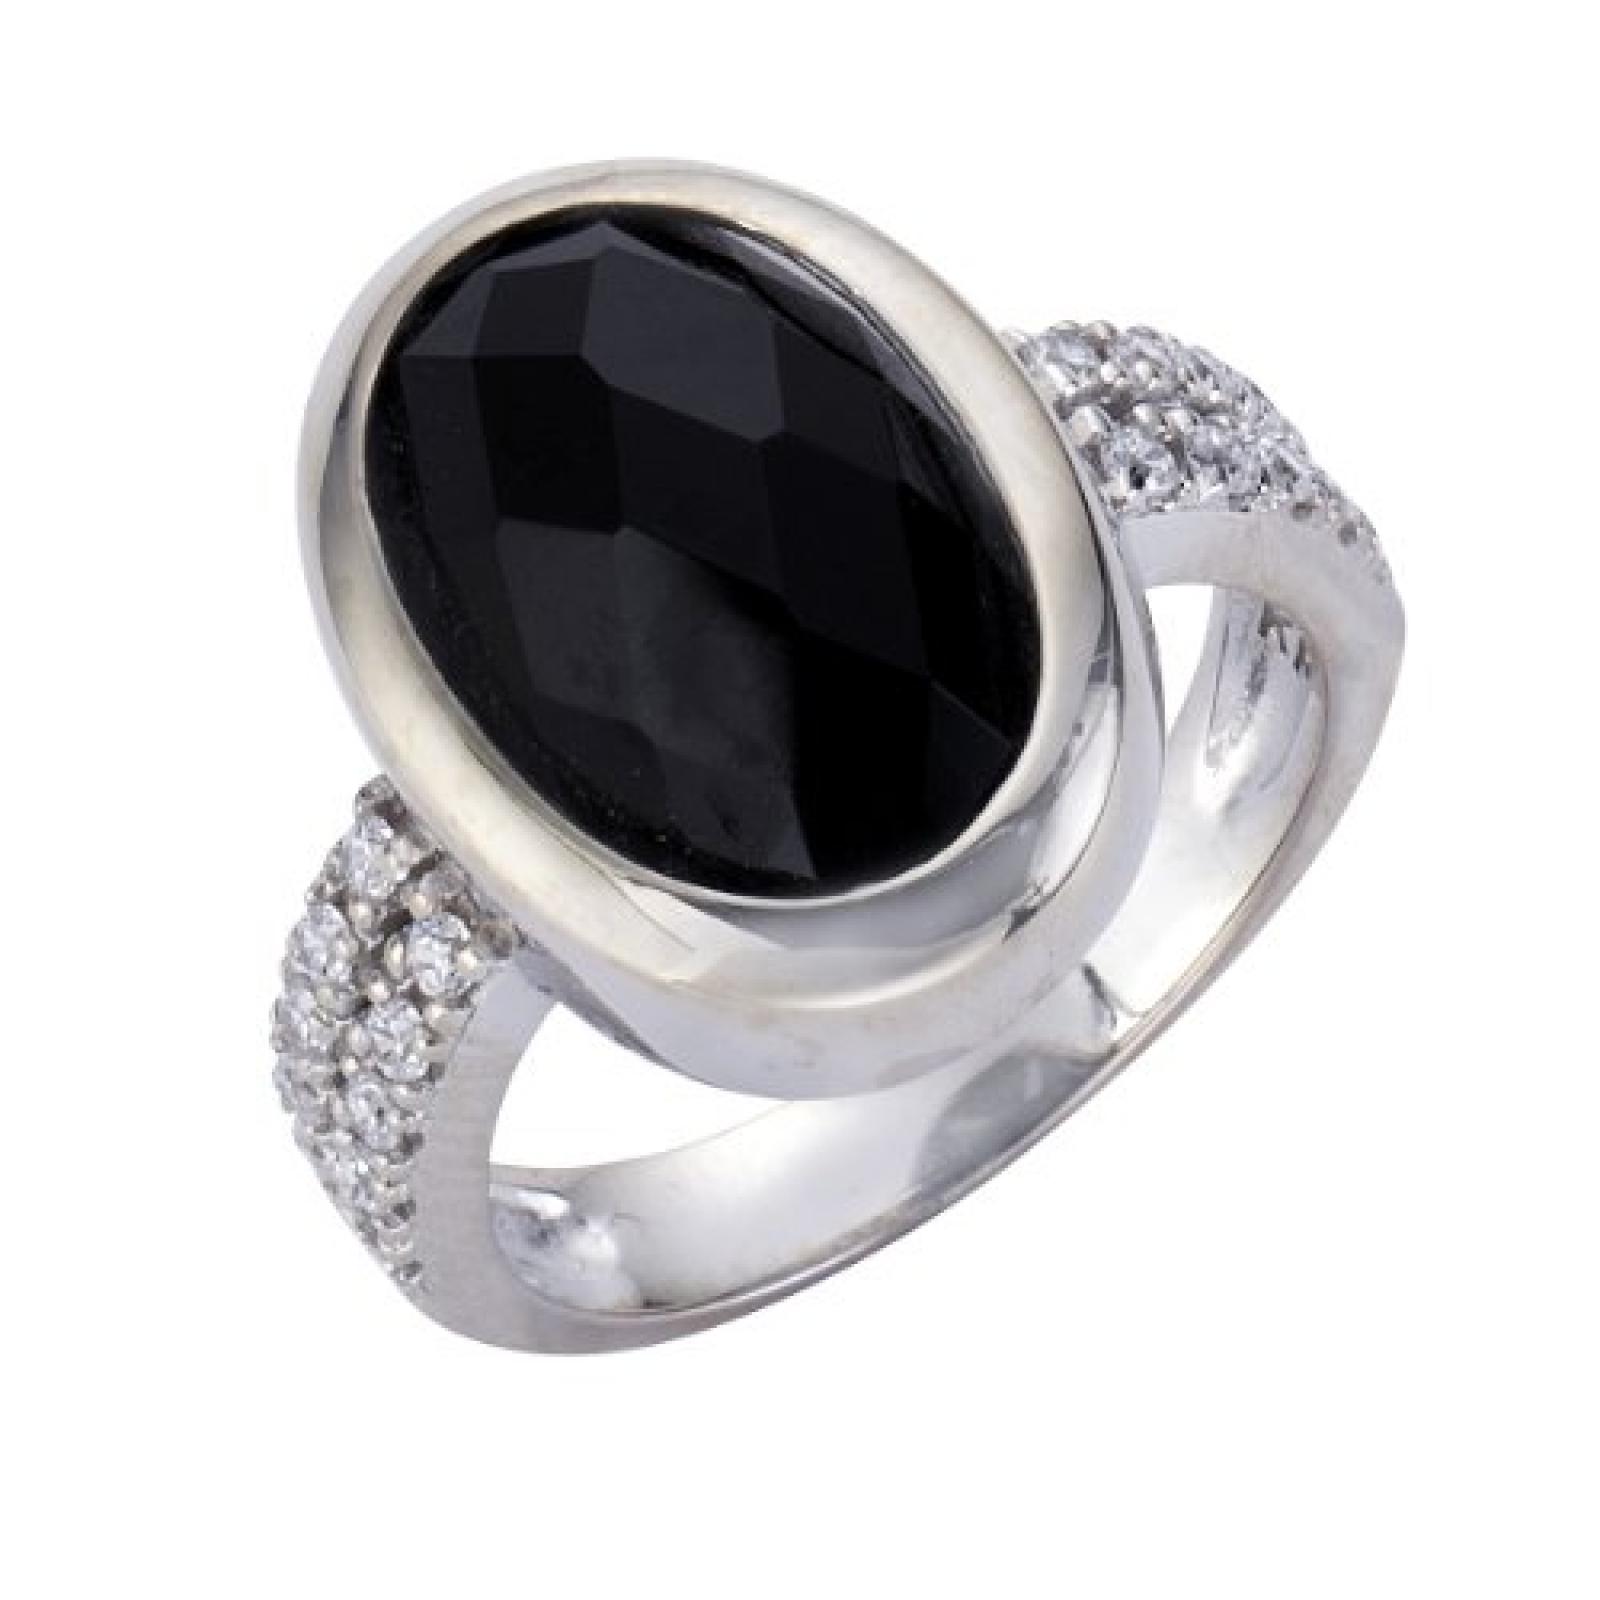 Celesta Damen-Ring 925 Sterling Silber Kristall schwarz + Zirkonia weiß Gr. 60 (19.1) 273270876-060 